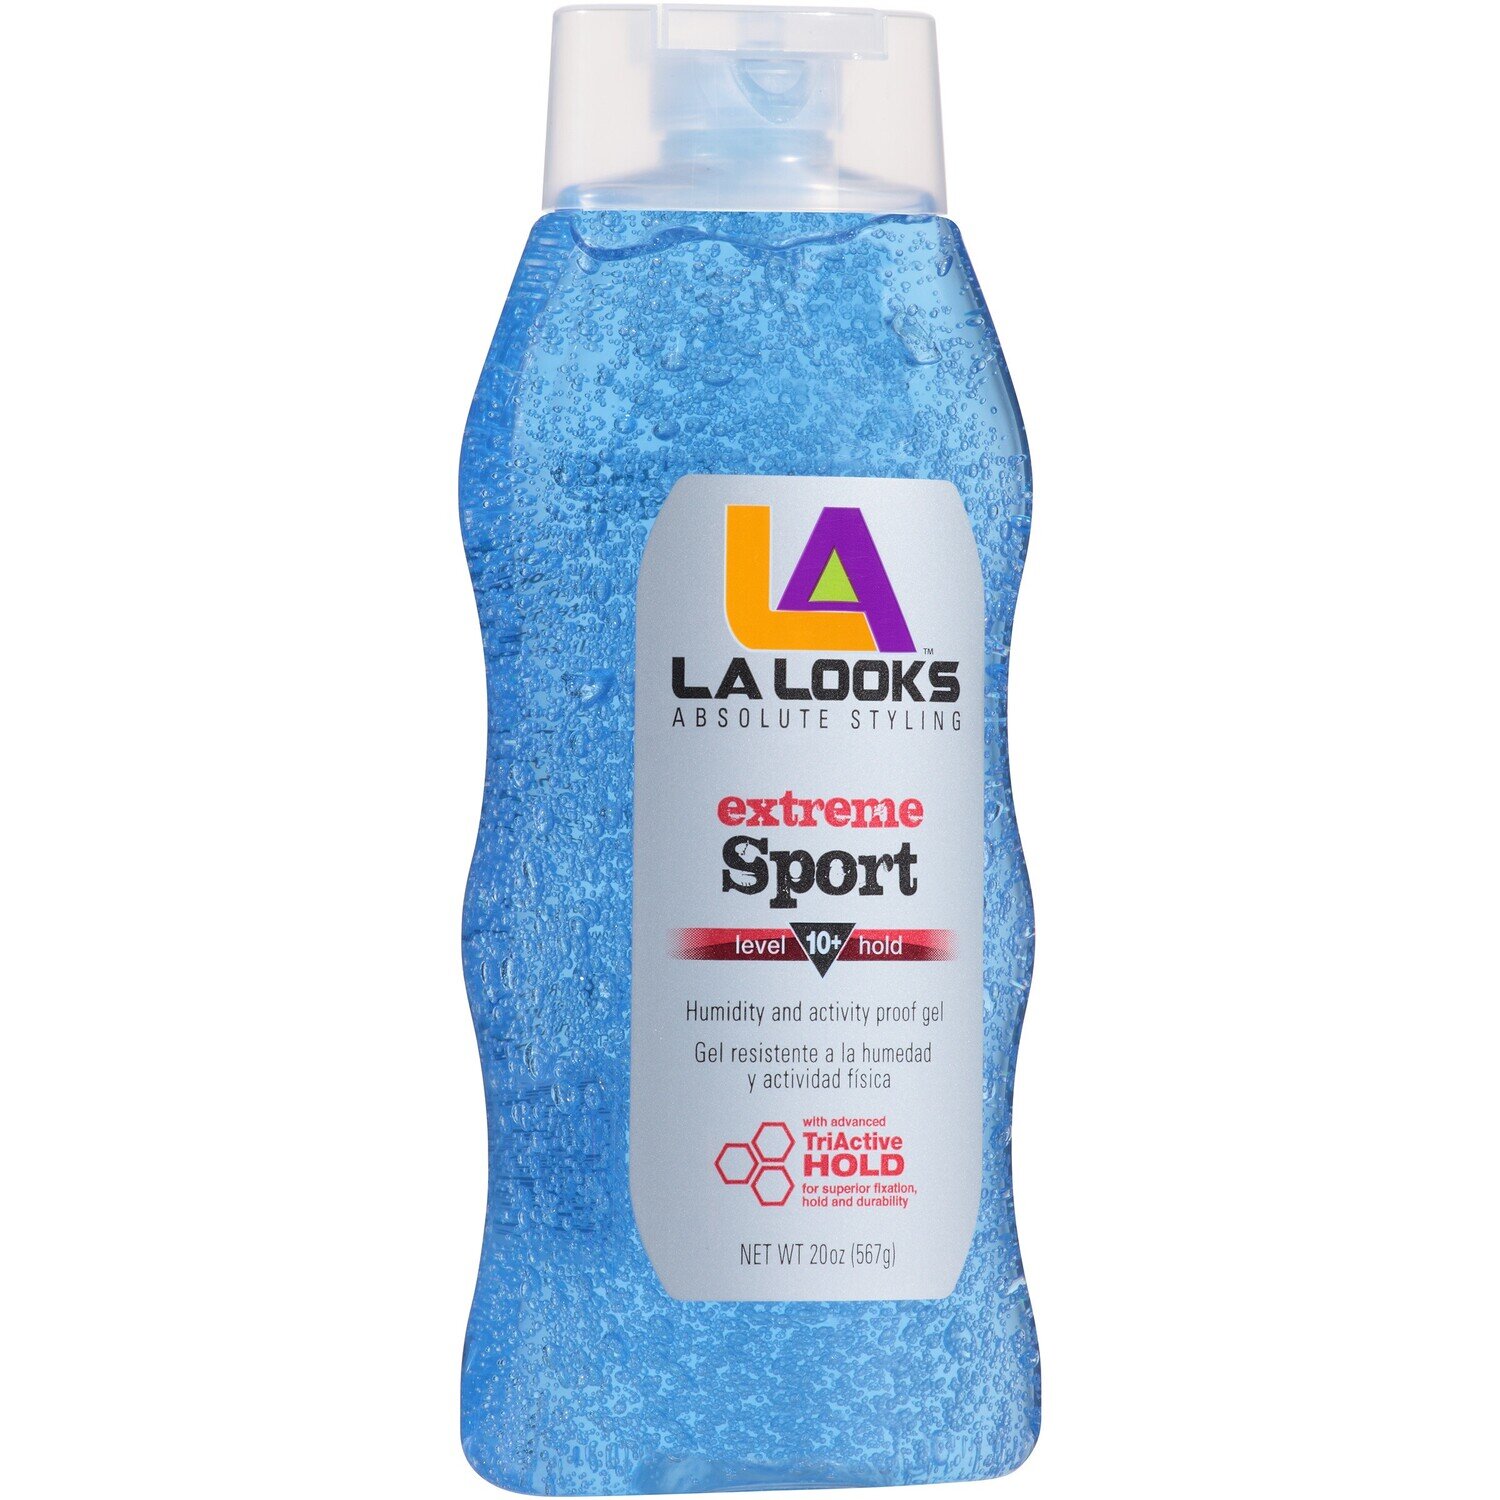 LA Looks Extreme Sport Hold 10+ Level Hair Gel